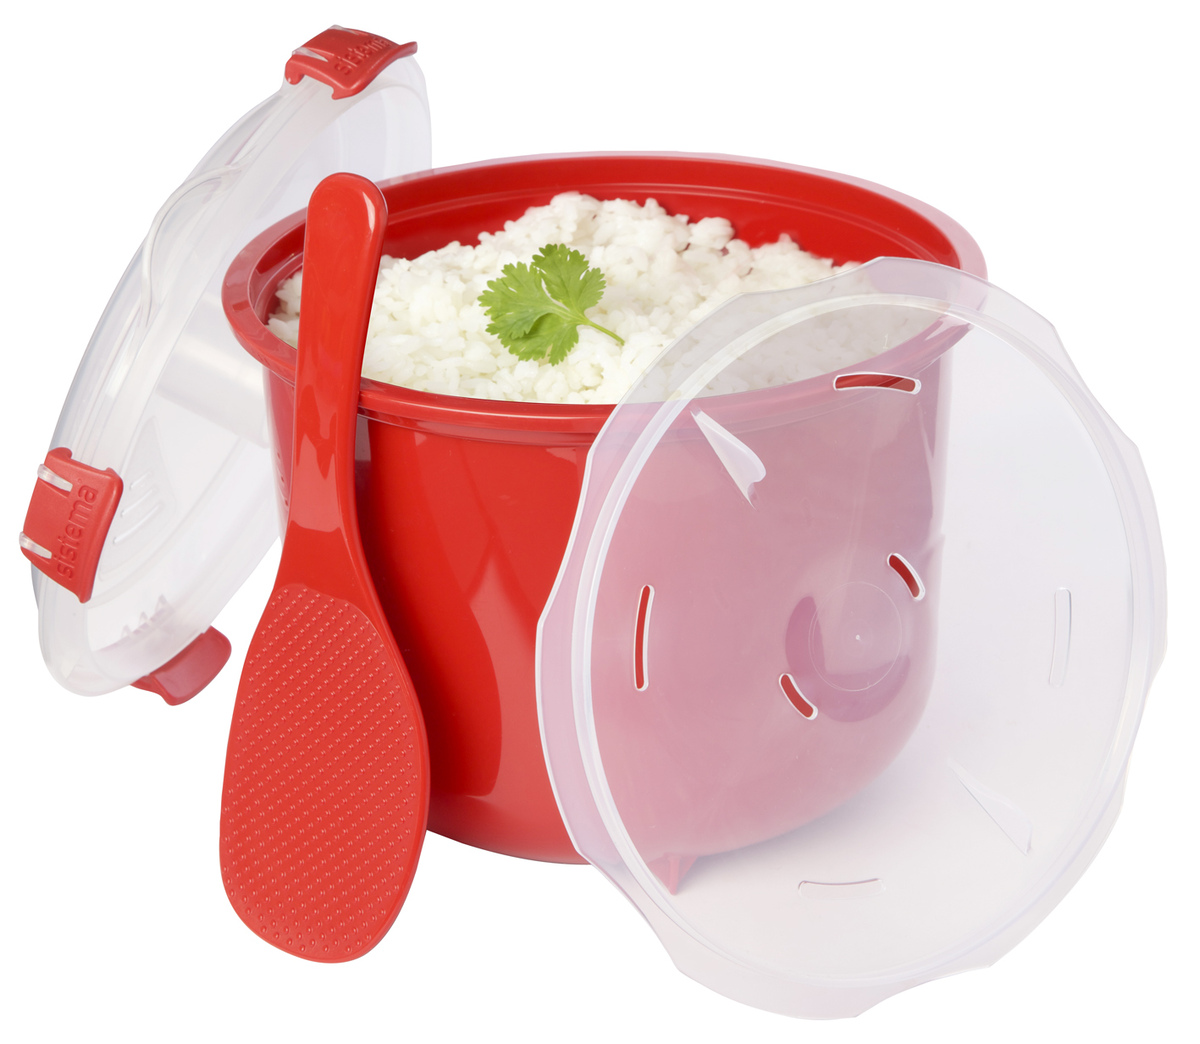  Koplex Easy & Multifunctional Rice Cooker Steam 2L  Pot/Dishwasher Safe, Non-Stick, Non-Toxic & BPA Free/Dozens of Tasty &  Healthy Meals in Minutes - Rice, Oats, Veggies, Pasta, Ramen, Quinoa & More